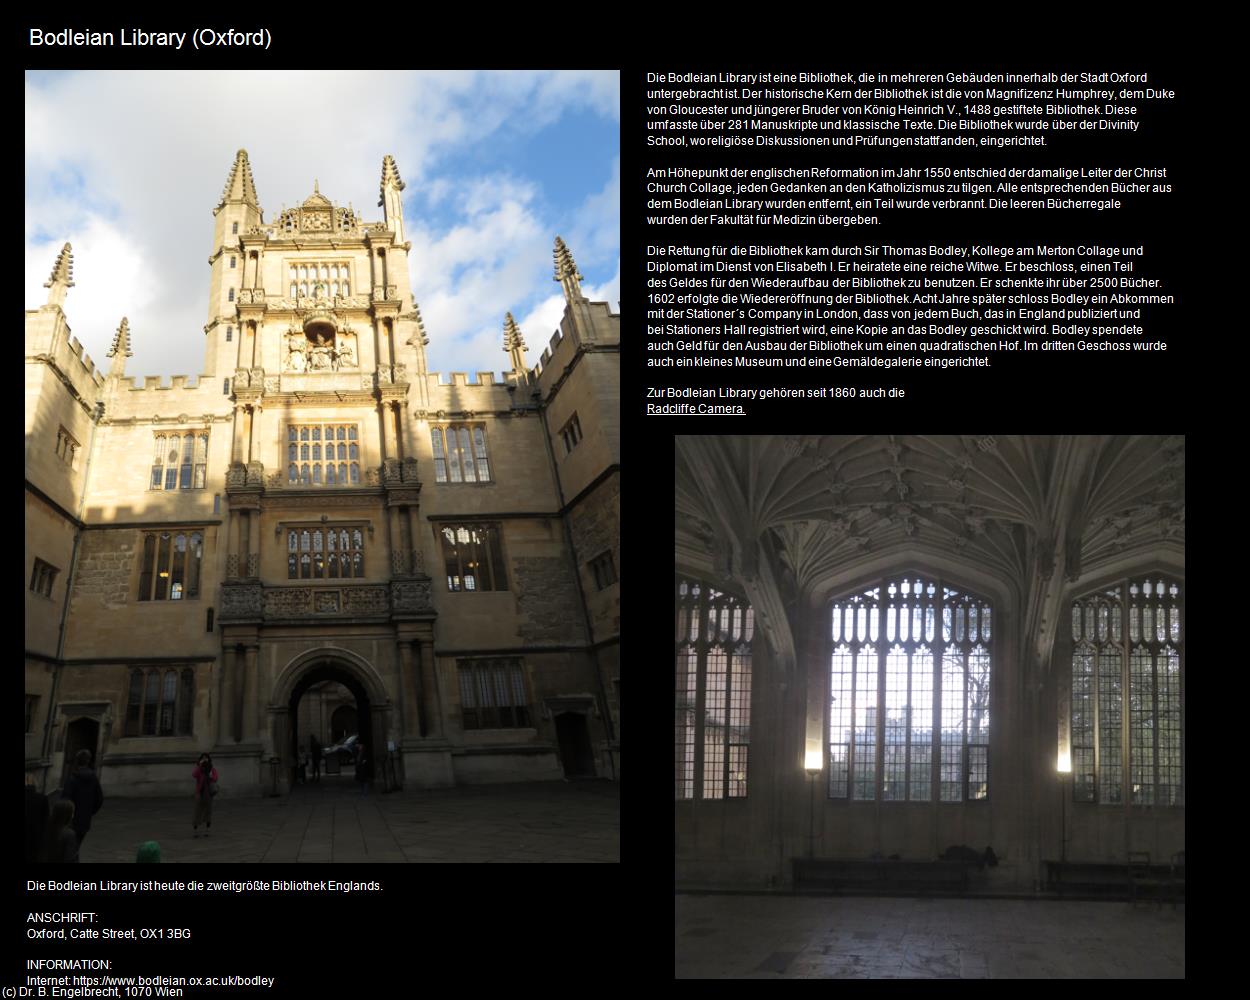 Bodleian Library (Oxford, England) in Kulturatlas-ENGLAND und WALES(c)B.Engelbrecht